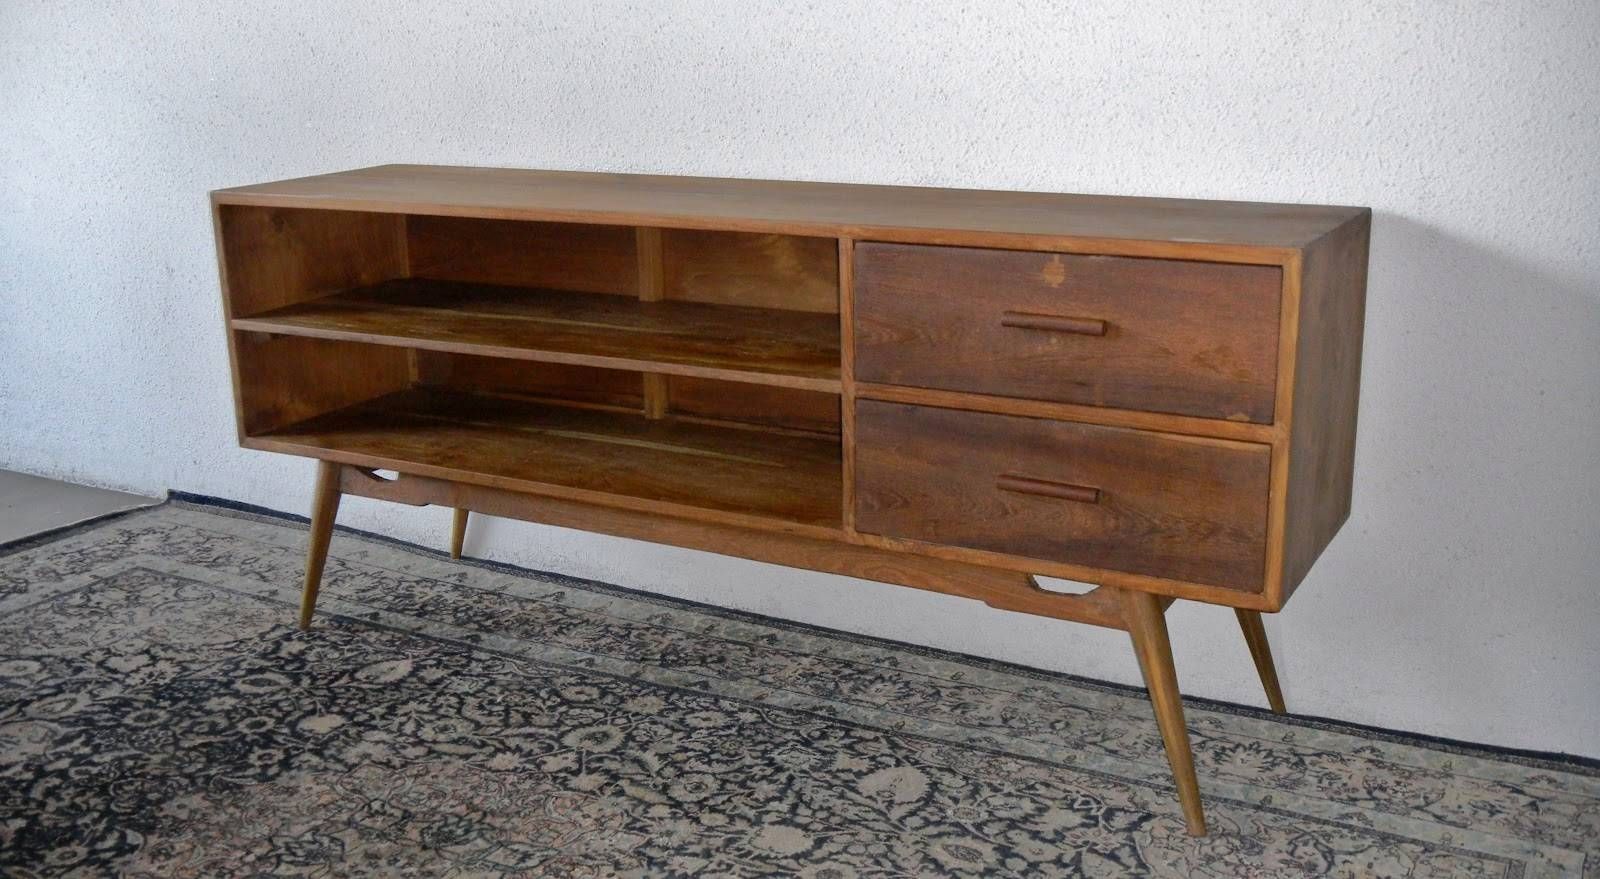 Second Charm Furniture: Vintage Sideboards | Ashley Furniture For Slim Sideboards (View 16 of 20)